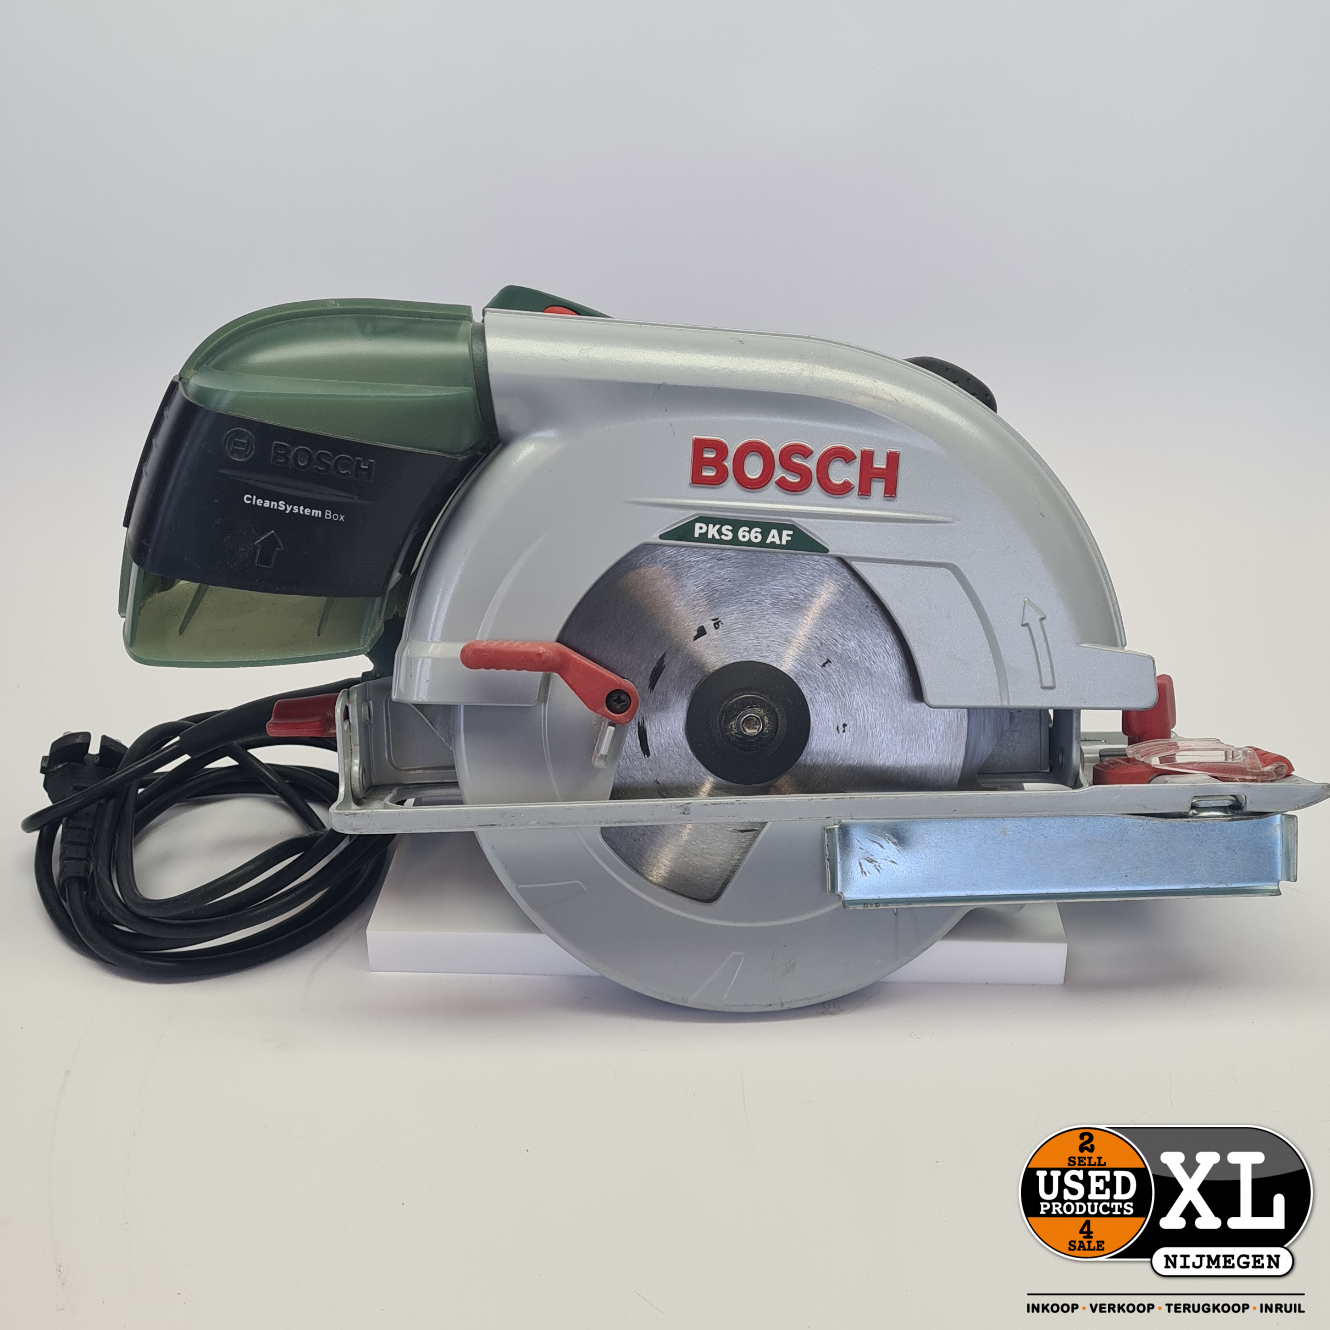 Bosch PKS 66 AF Hand Cirkelzaag 1600W | met - Used Products Nijmegen